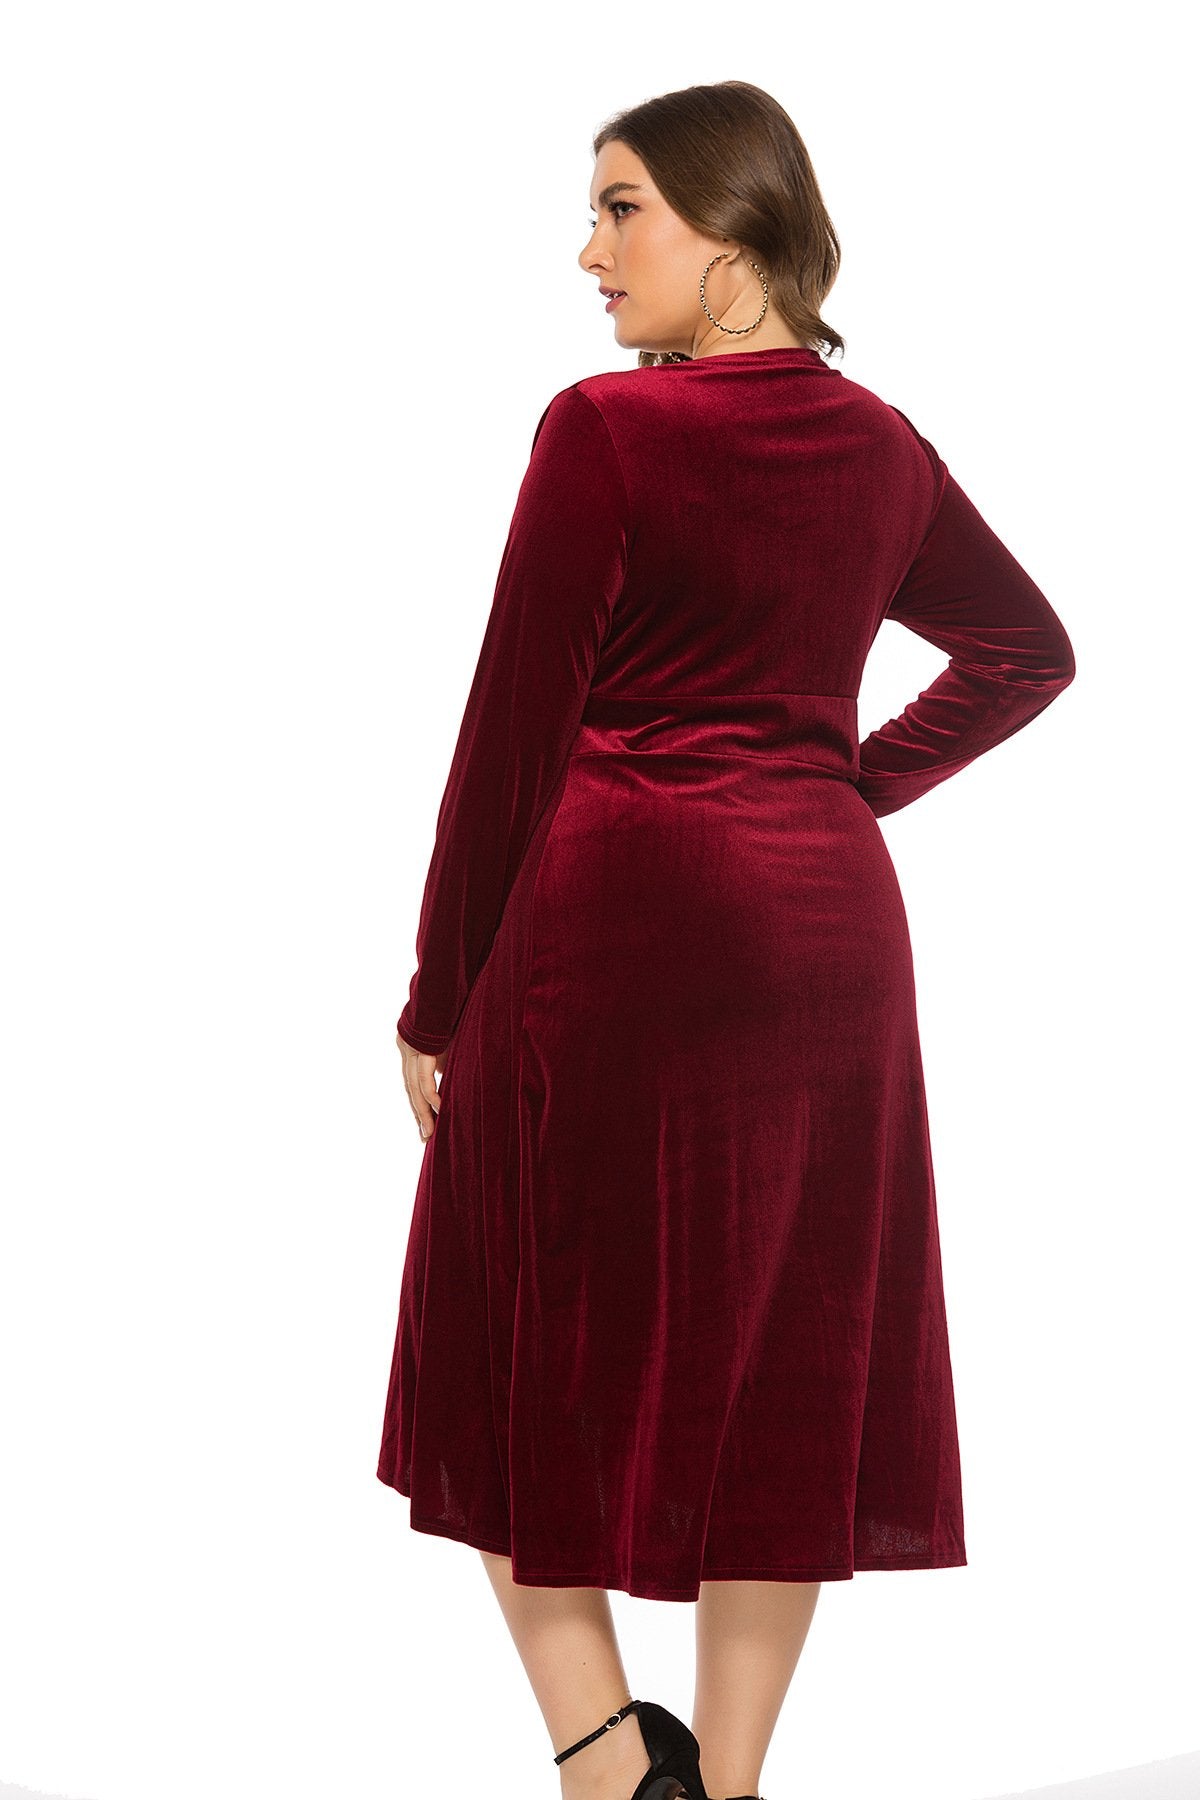 Long Sleeves Women Plus Sizes Fall Dresses-STYLEGOING